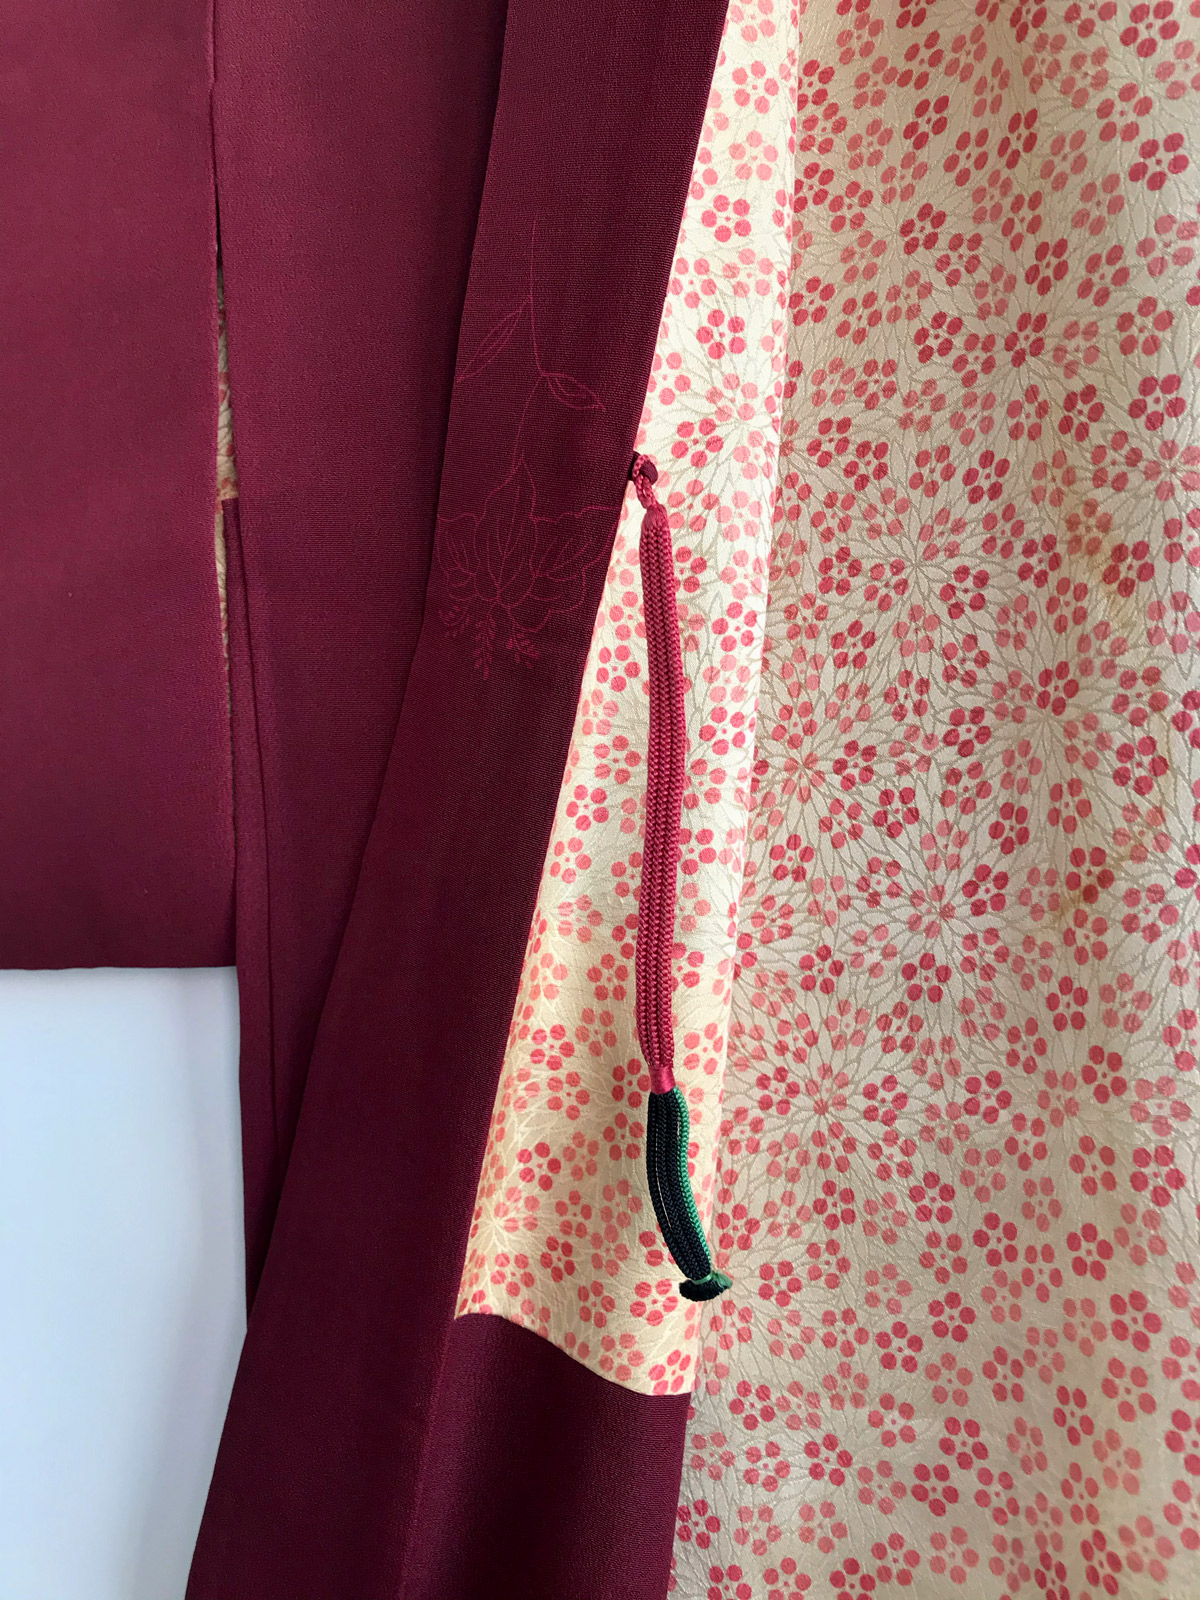 Kohana – chique and simple Kimono Jacket (Haori) in wine red